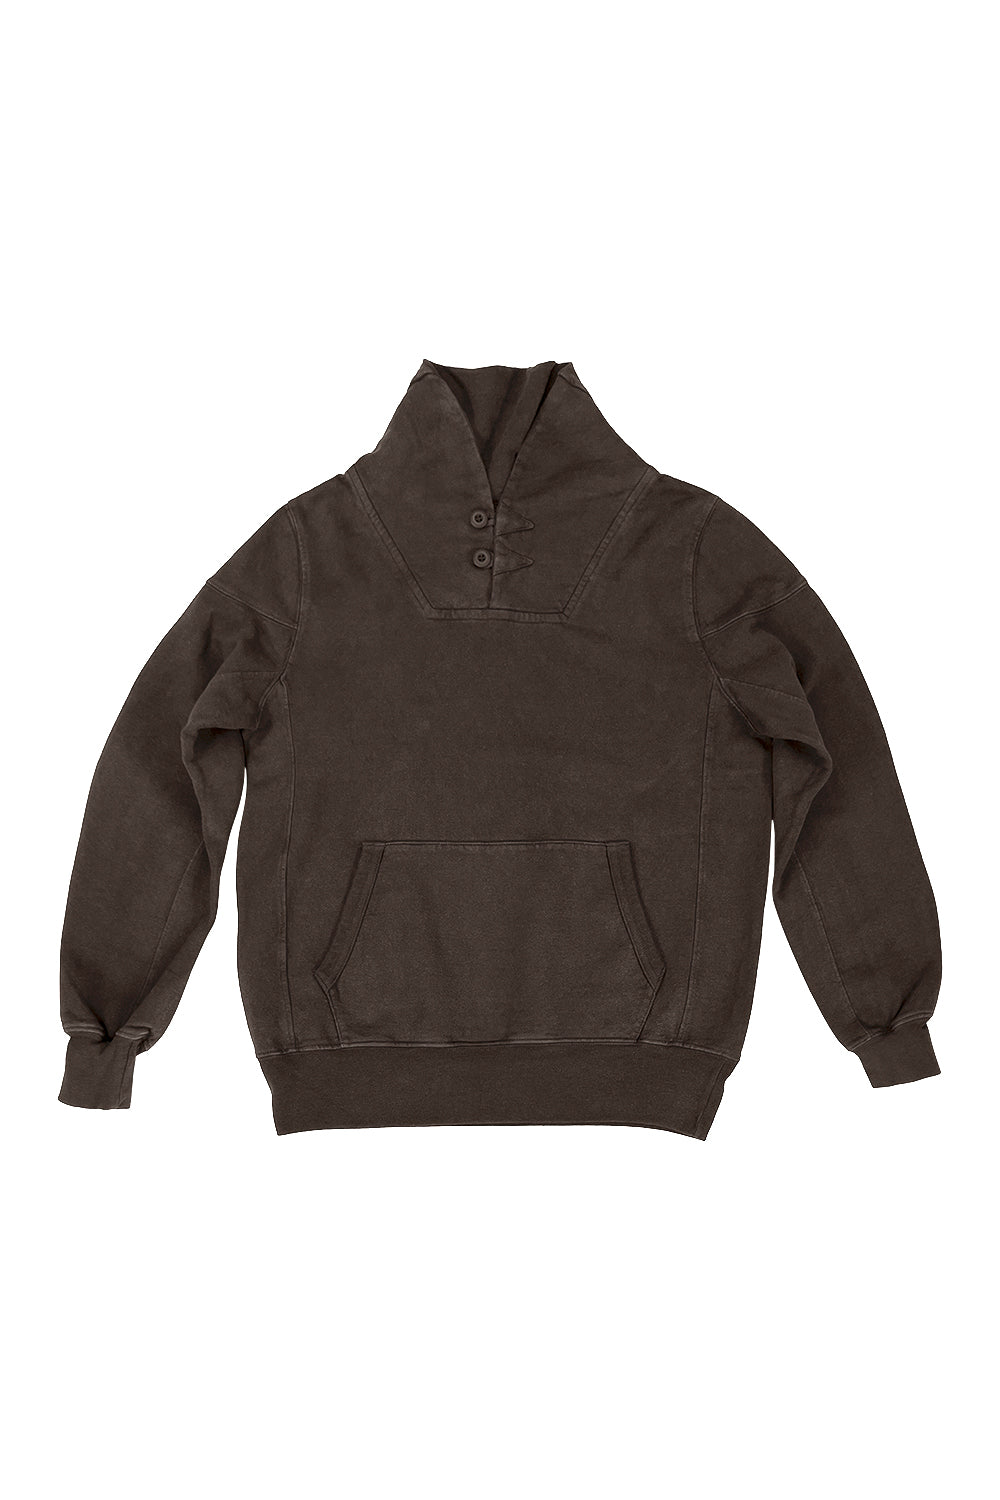 Whittier Sweatshirt | Jungmaven Hemp Clothing & Accessories / Color: Coffee Bean